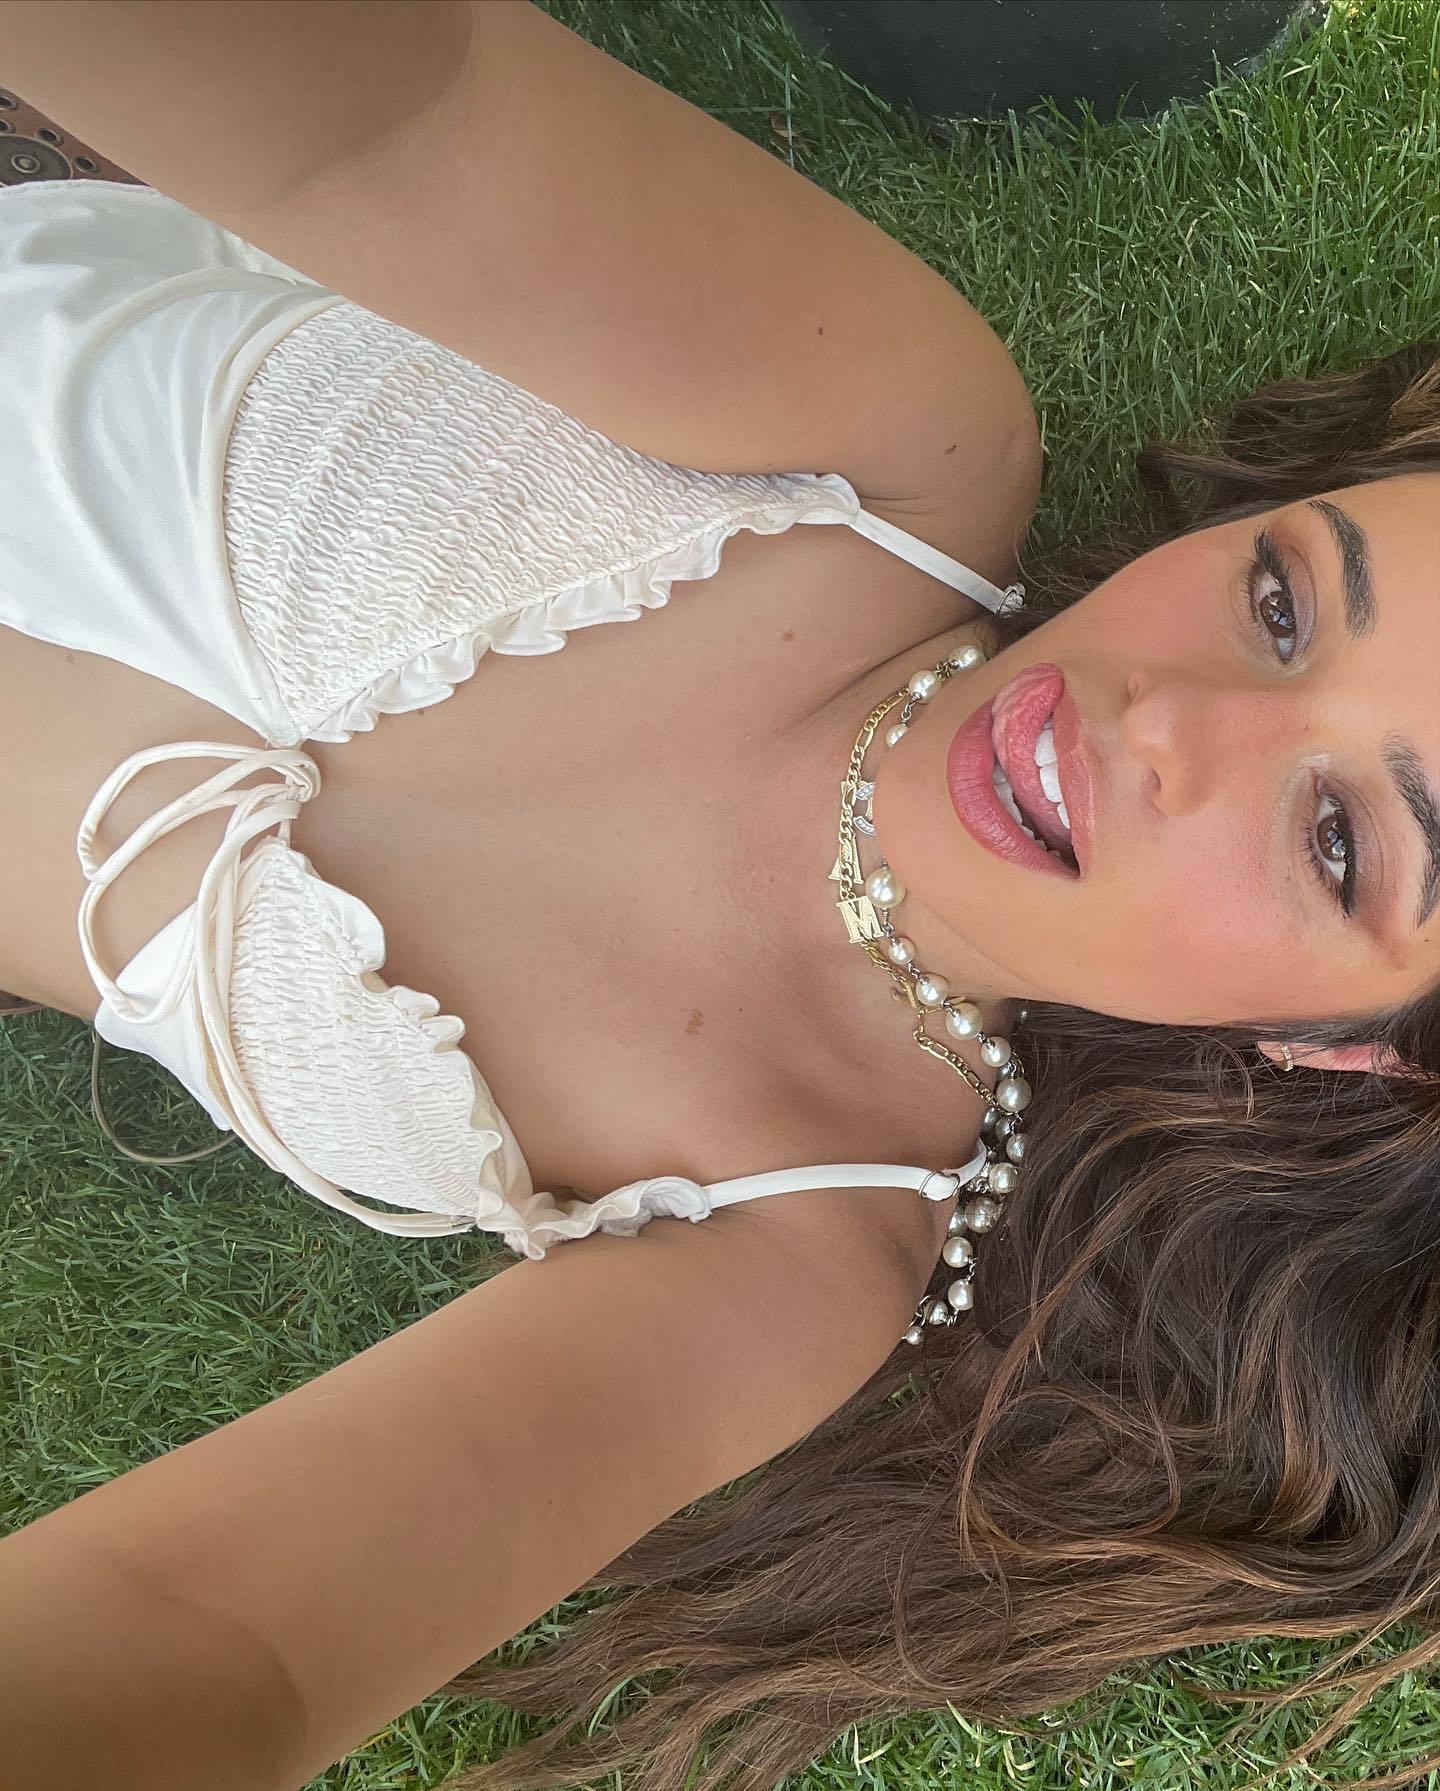 Photos n°2 : Camila Cabello’s Bikini Selfie!